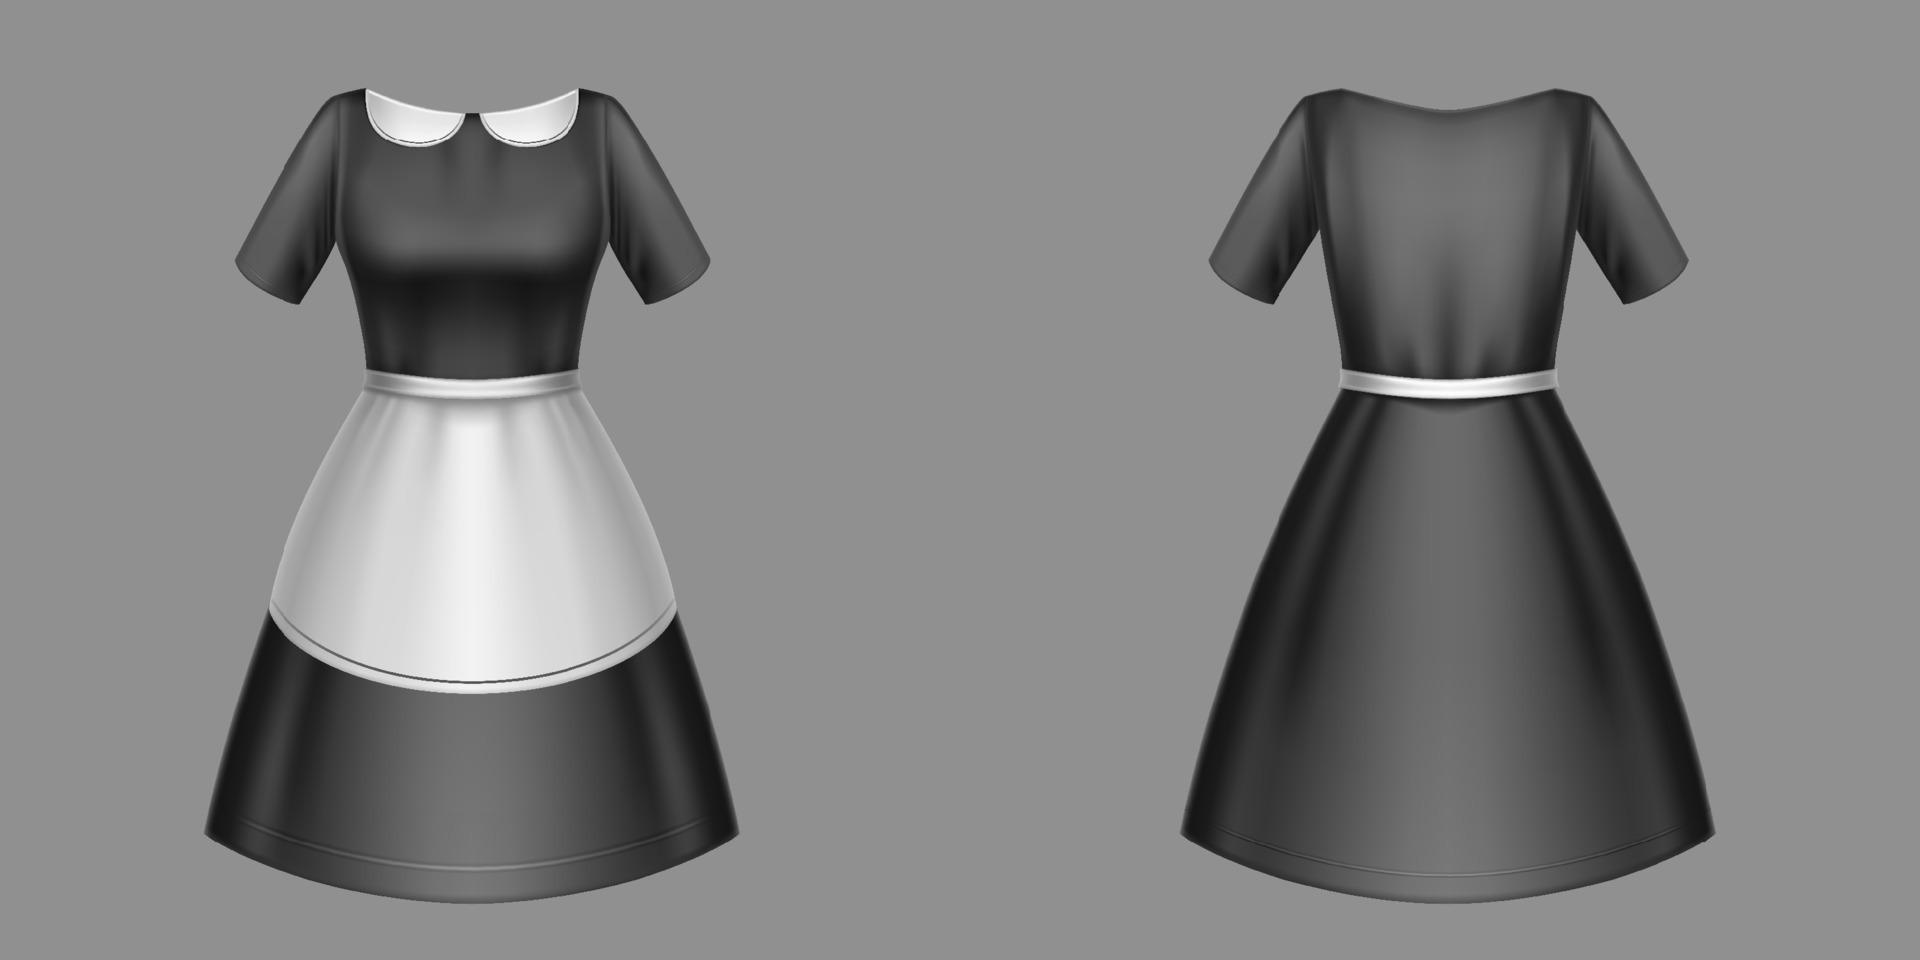 hulp in de huishouding uniform zwart dienstmeisje jurk, kledingstuk ontwerp vector